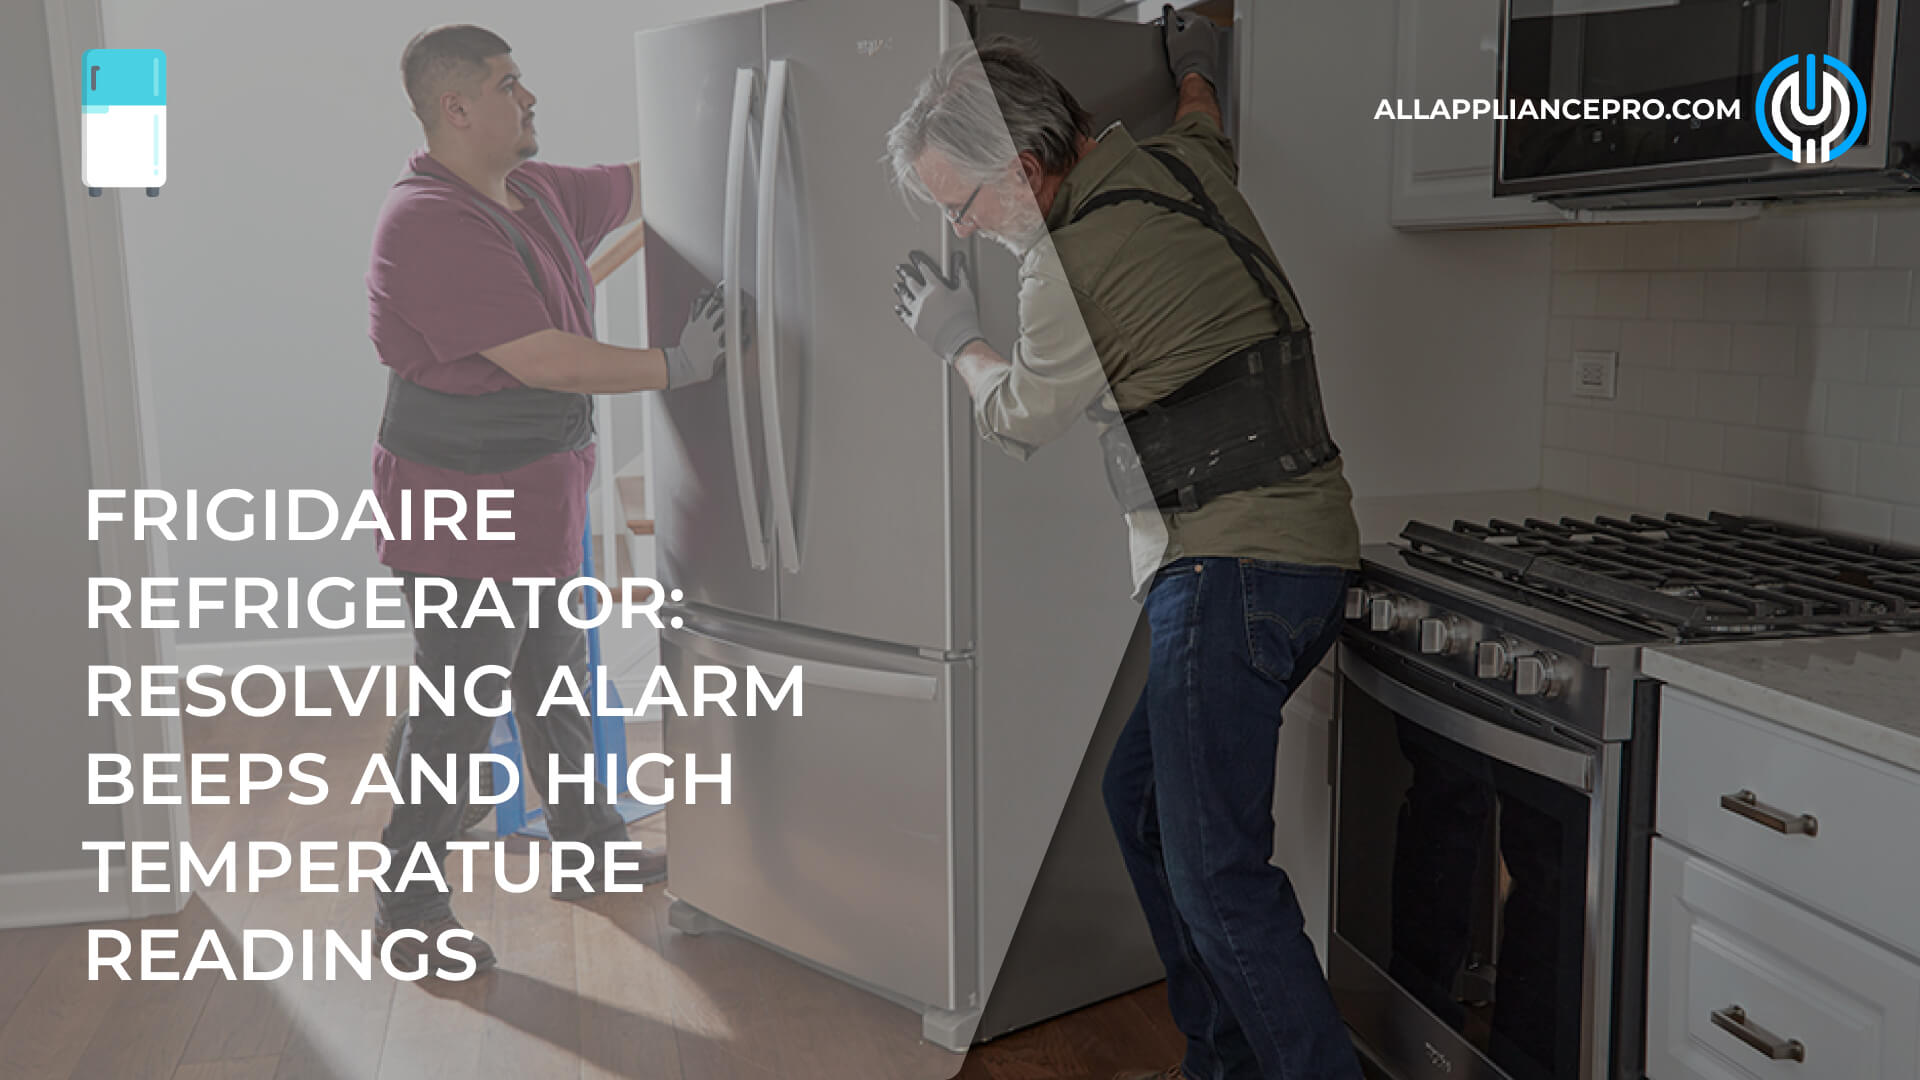 Frigidaire Refrigerator: Resolving Alarm Beeps and High Temperature Readings